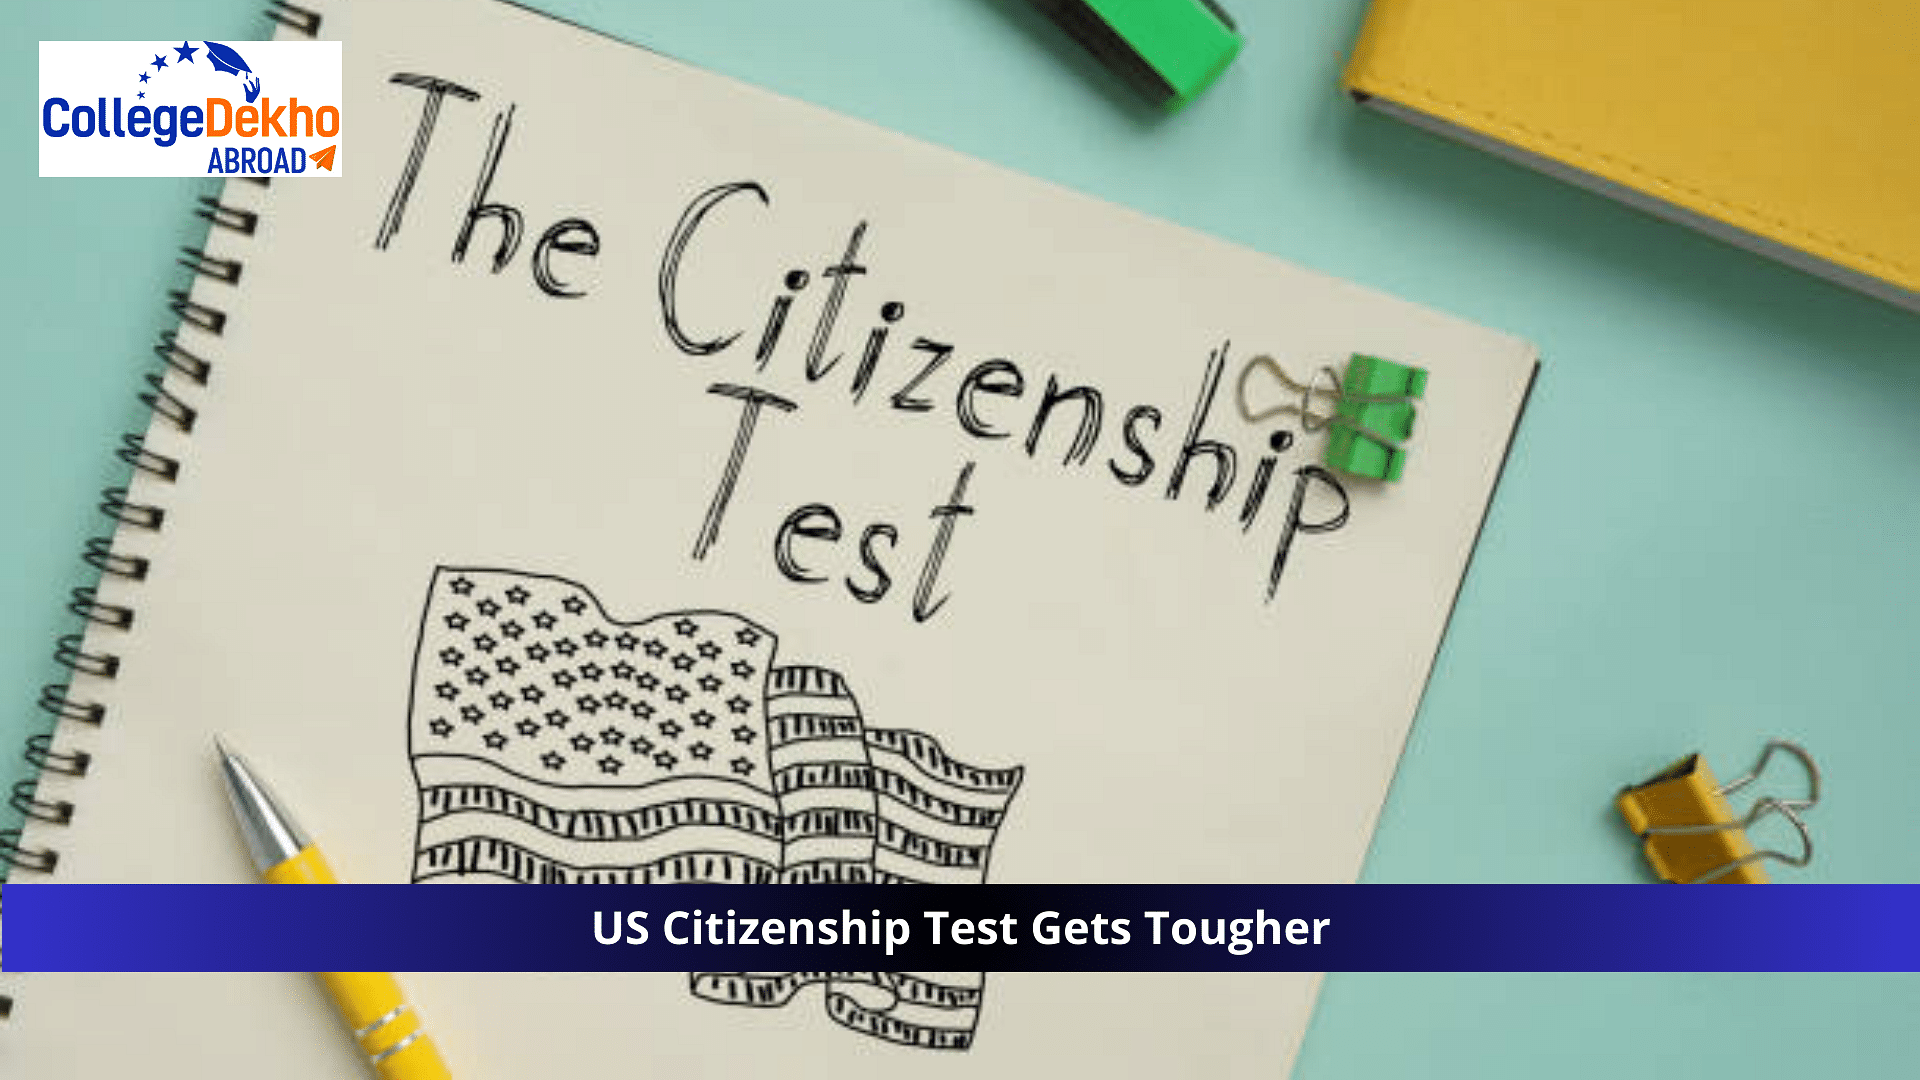 US Citizenship Test Gets Tougher